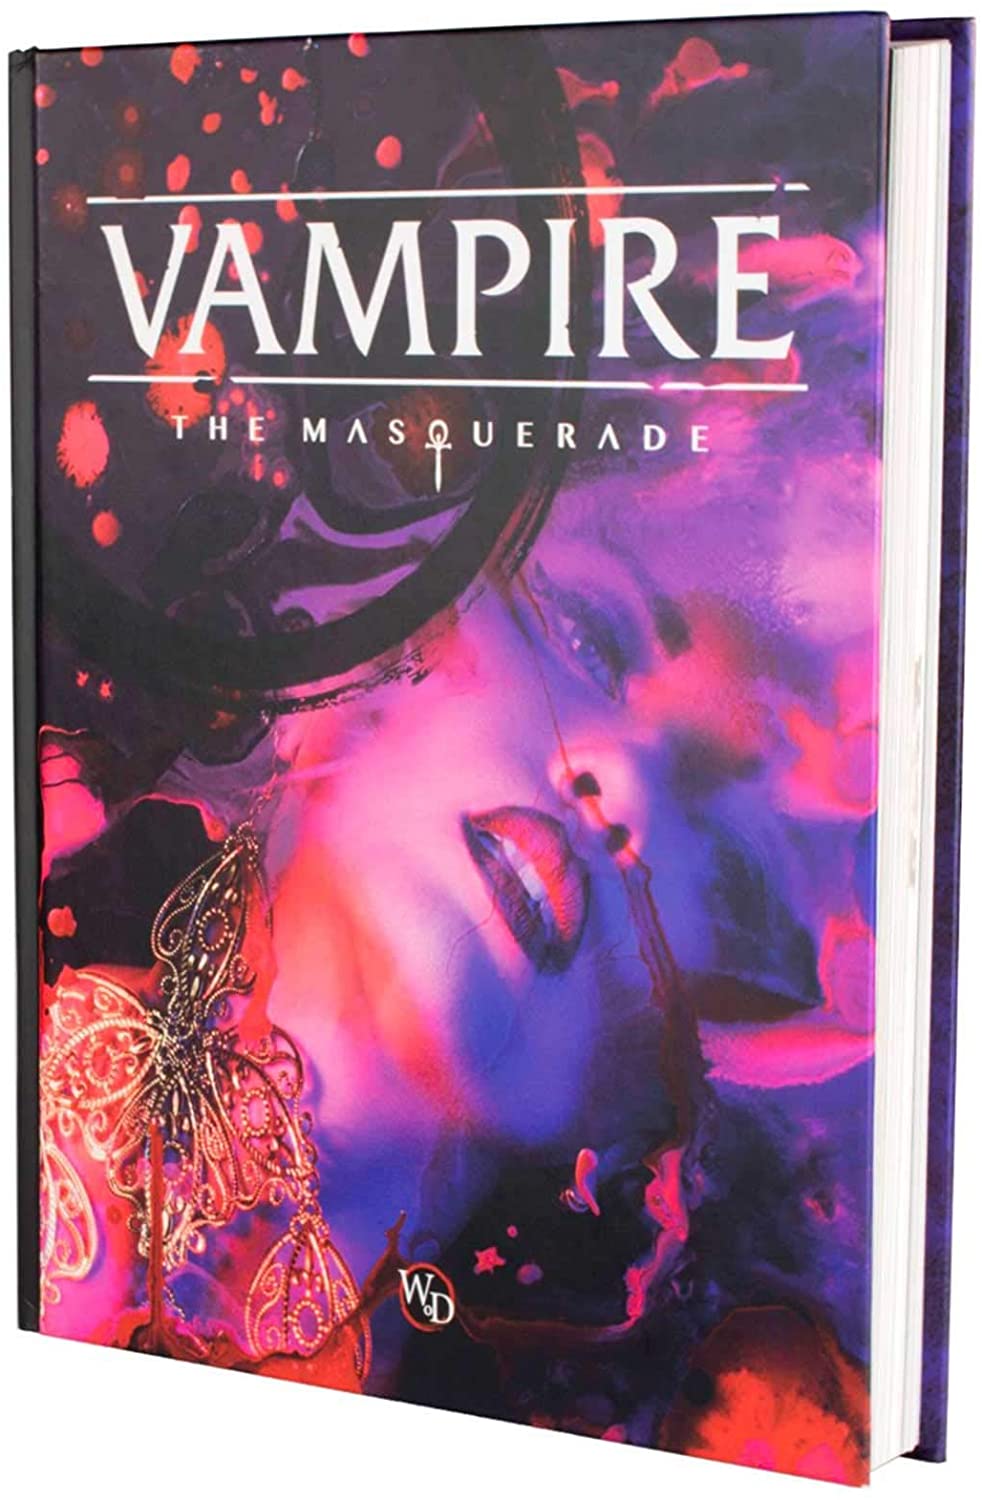 Vampire The Masquerade, 5th Edition Core Rulebook (Hardcover)